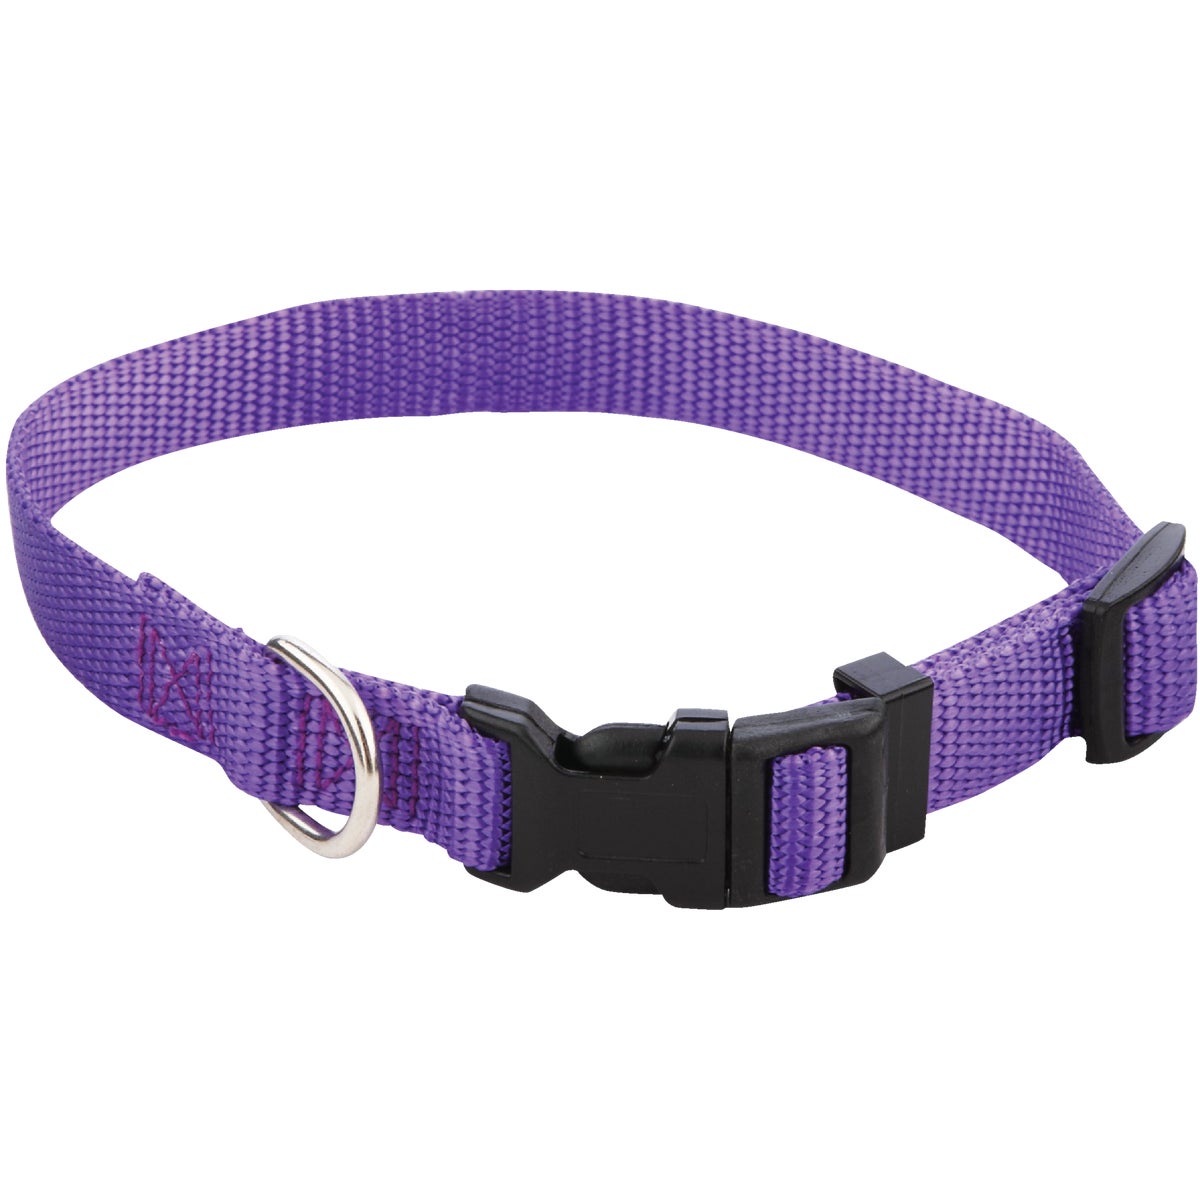 Item 810858, Adjustable design, durable nylon dog collar.